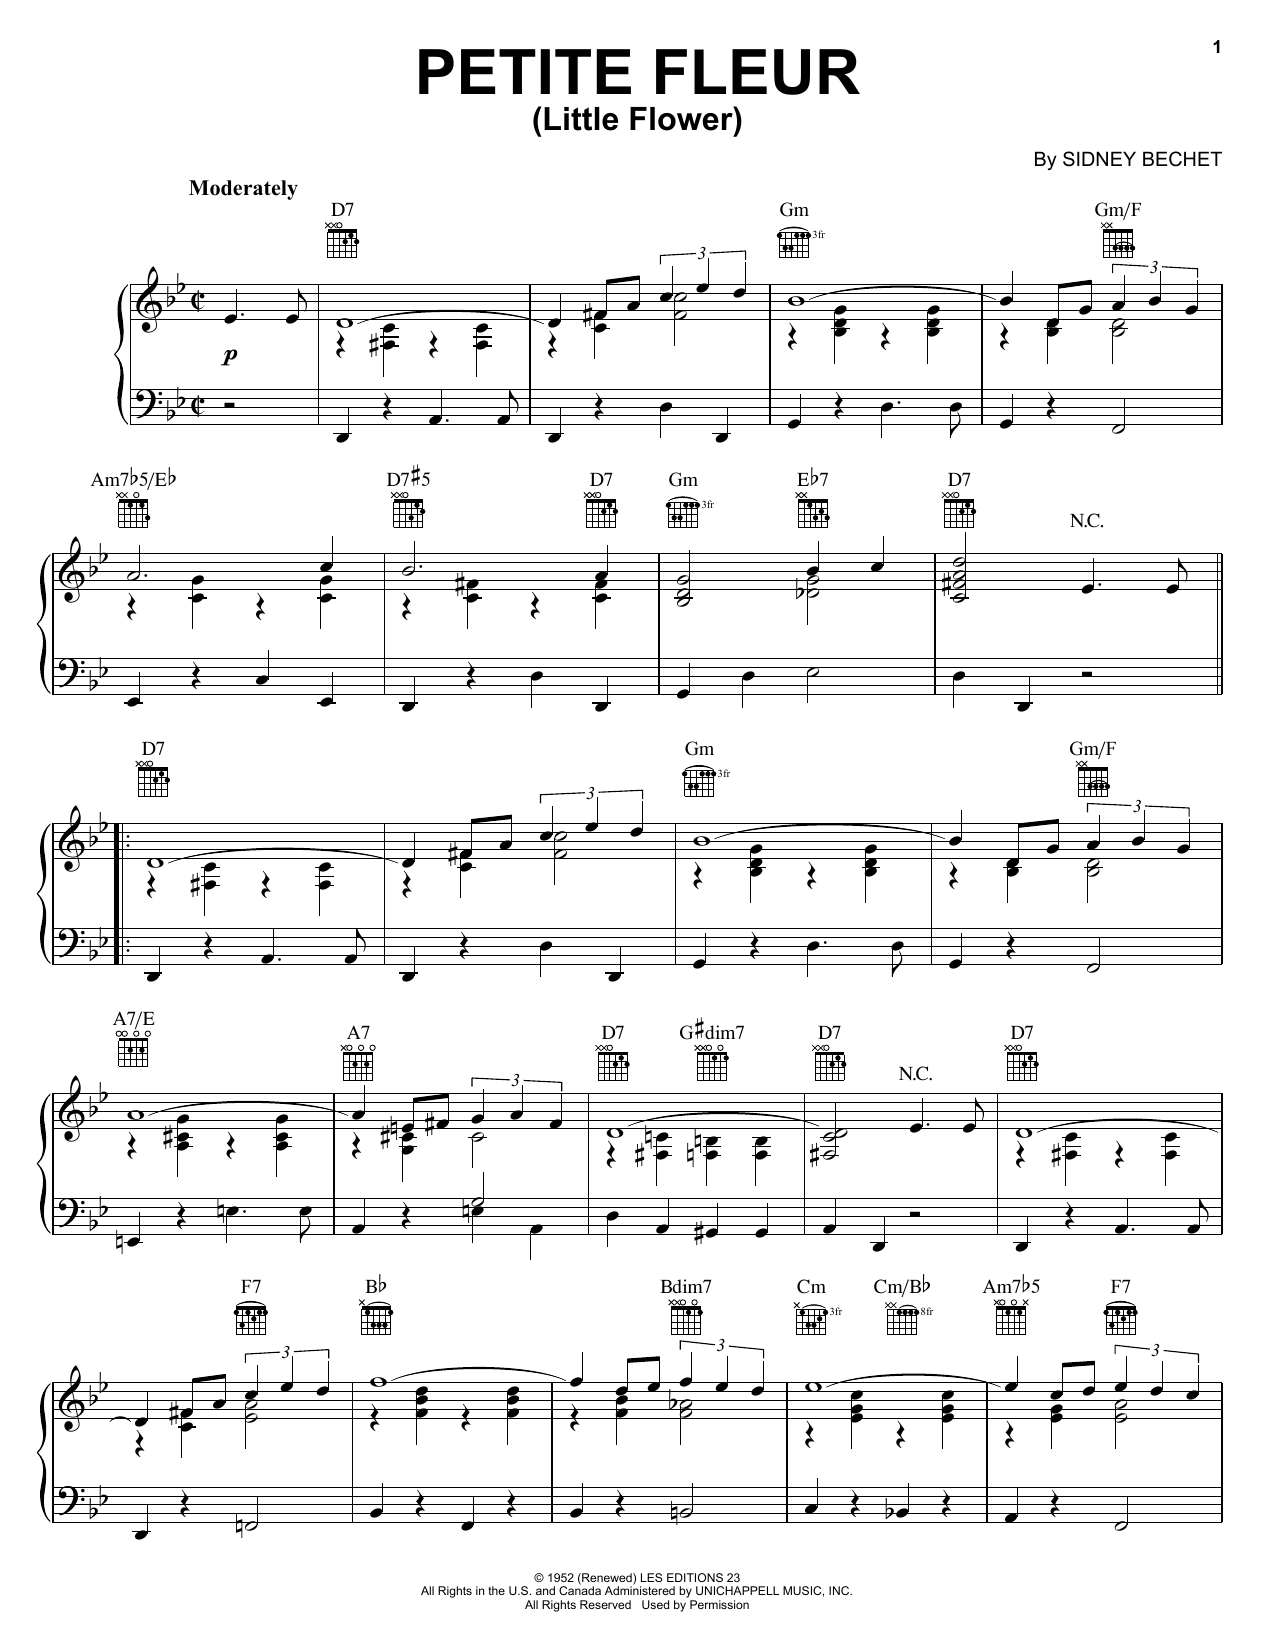 Sidney Bechet Petite Fleur (Little Flower) Sheet Music Notes & Chords for Alto Saxophone - Download or Print PDF